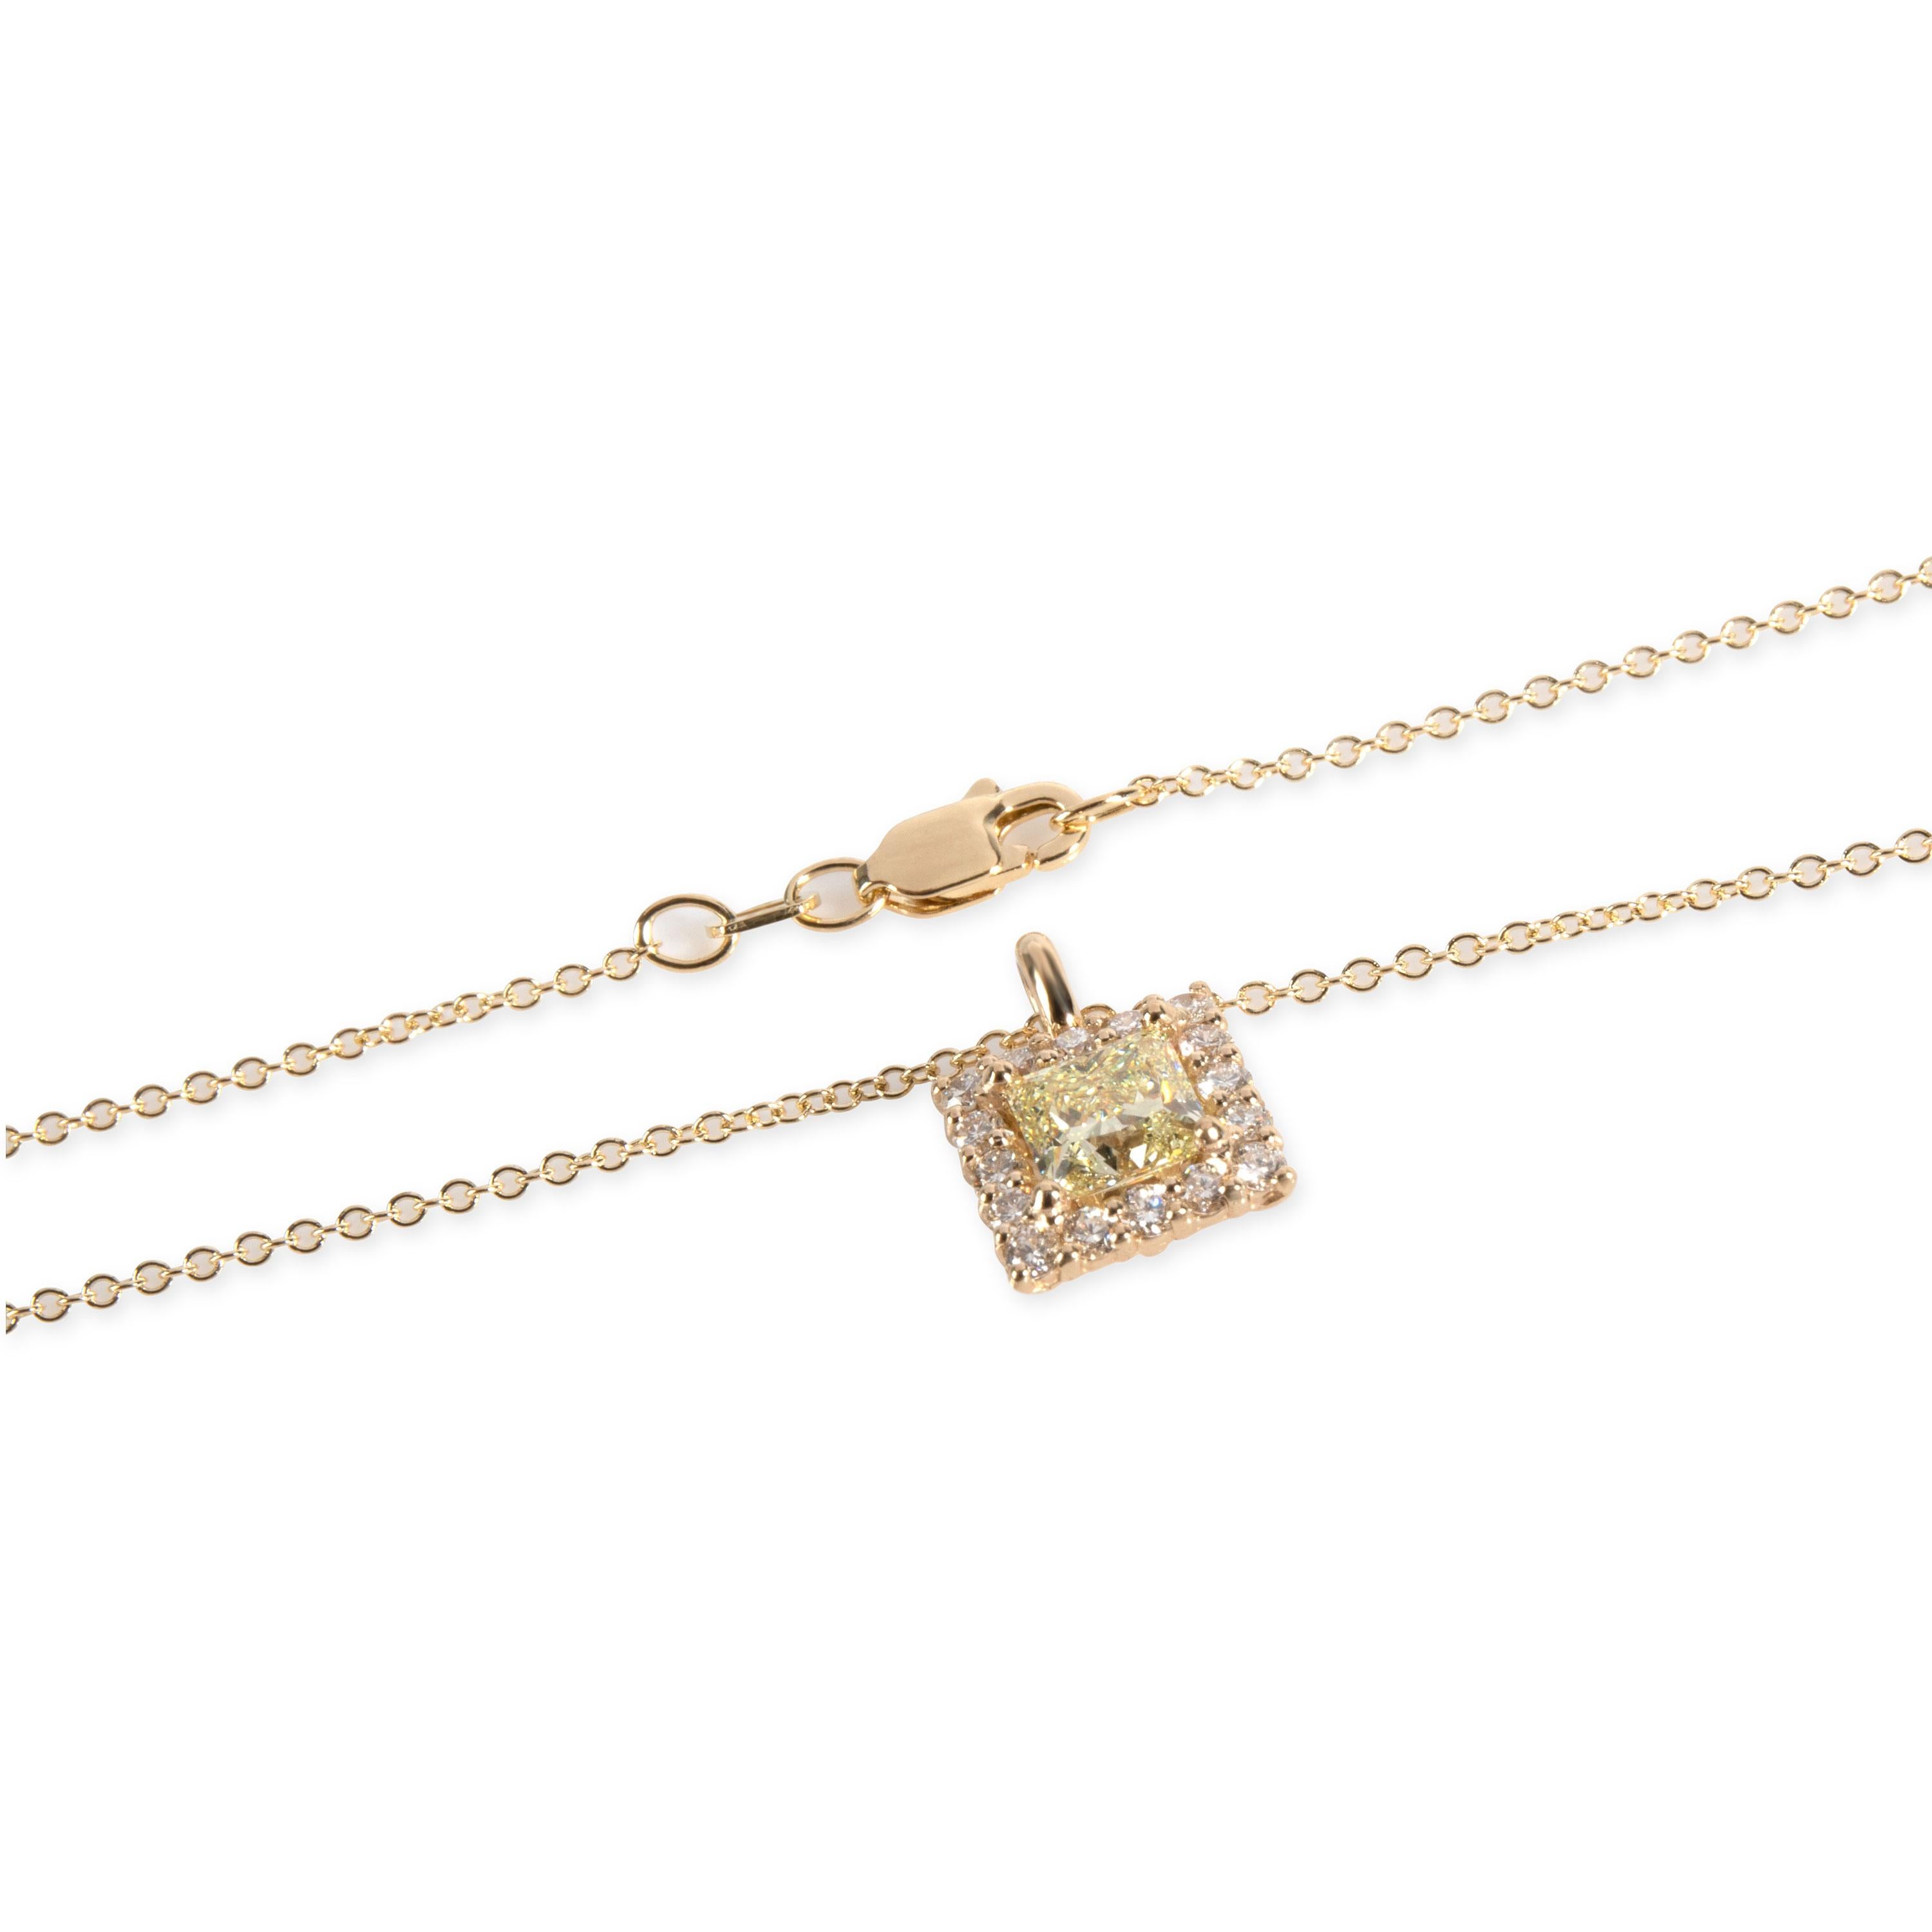 Princess Cut GIA Certified Diamond Necklace in 14 Karat Yellow Gold W-X VS2 1.38 Carat